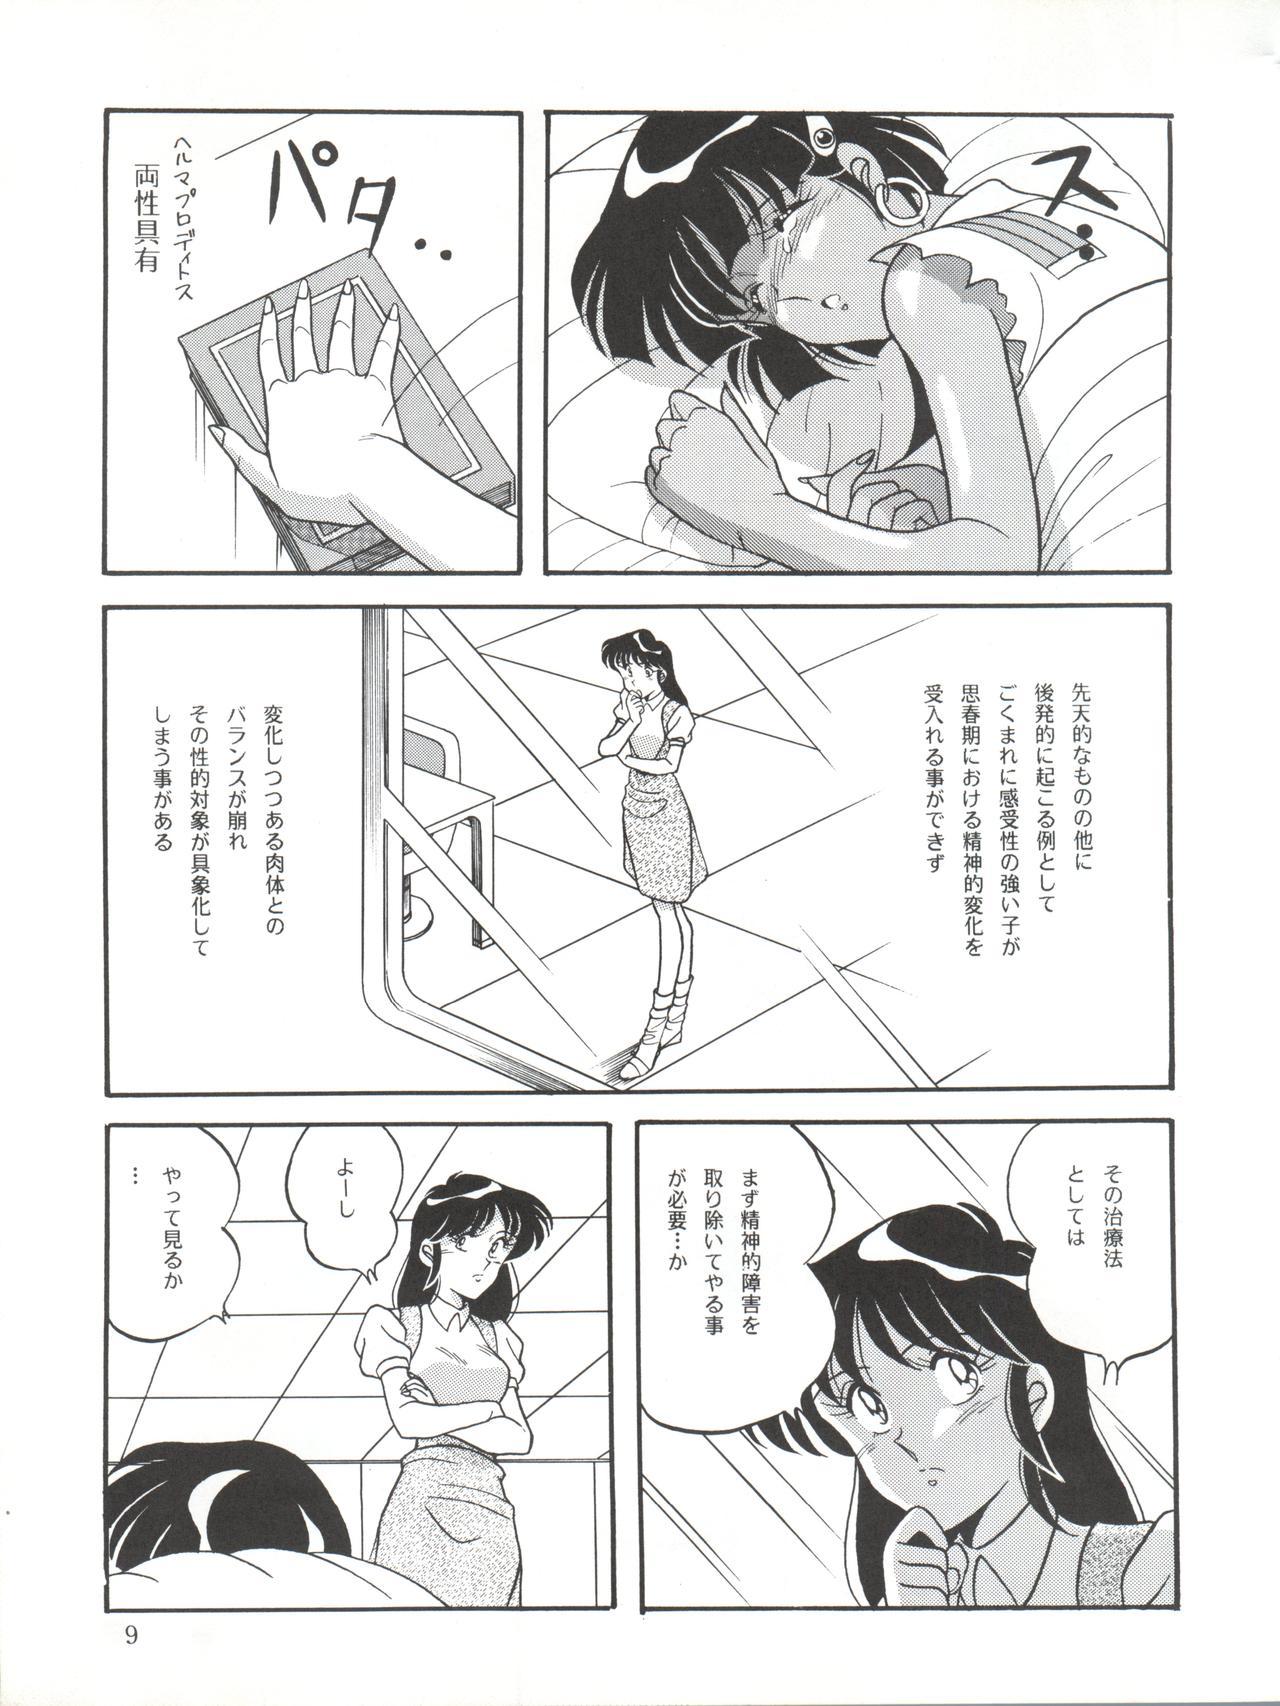 Bribe Vocalization 2 - Fushigi no umi no nadia Leaked - Page 9